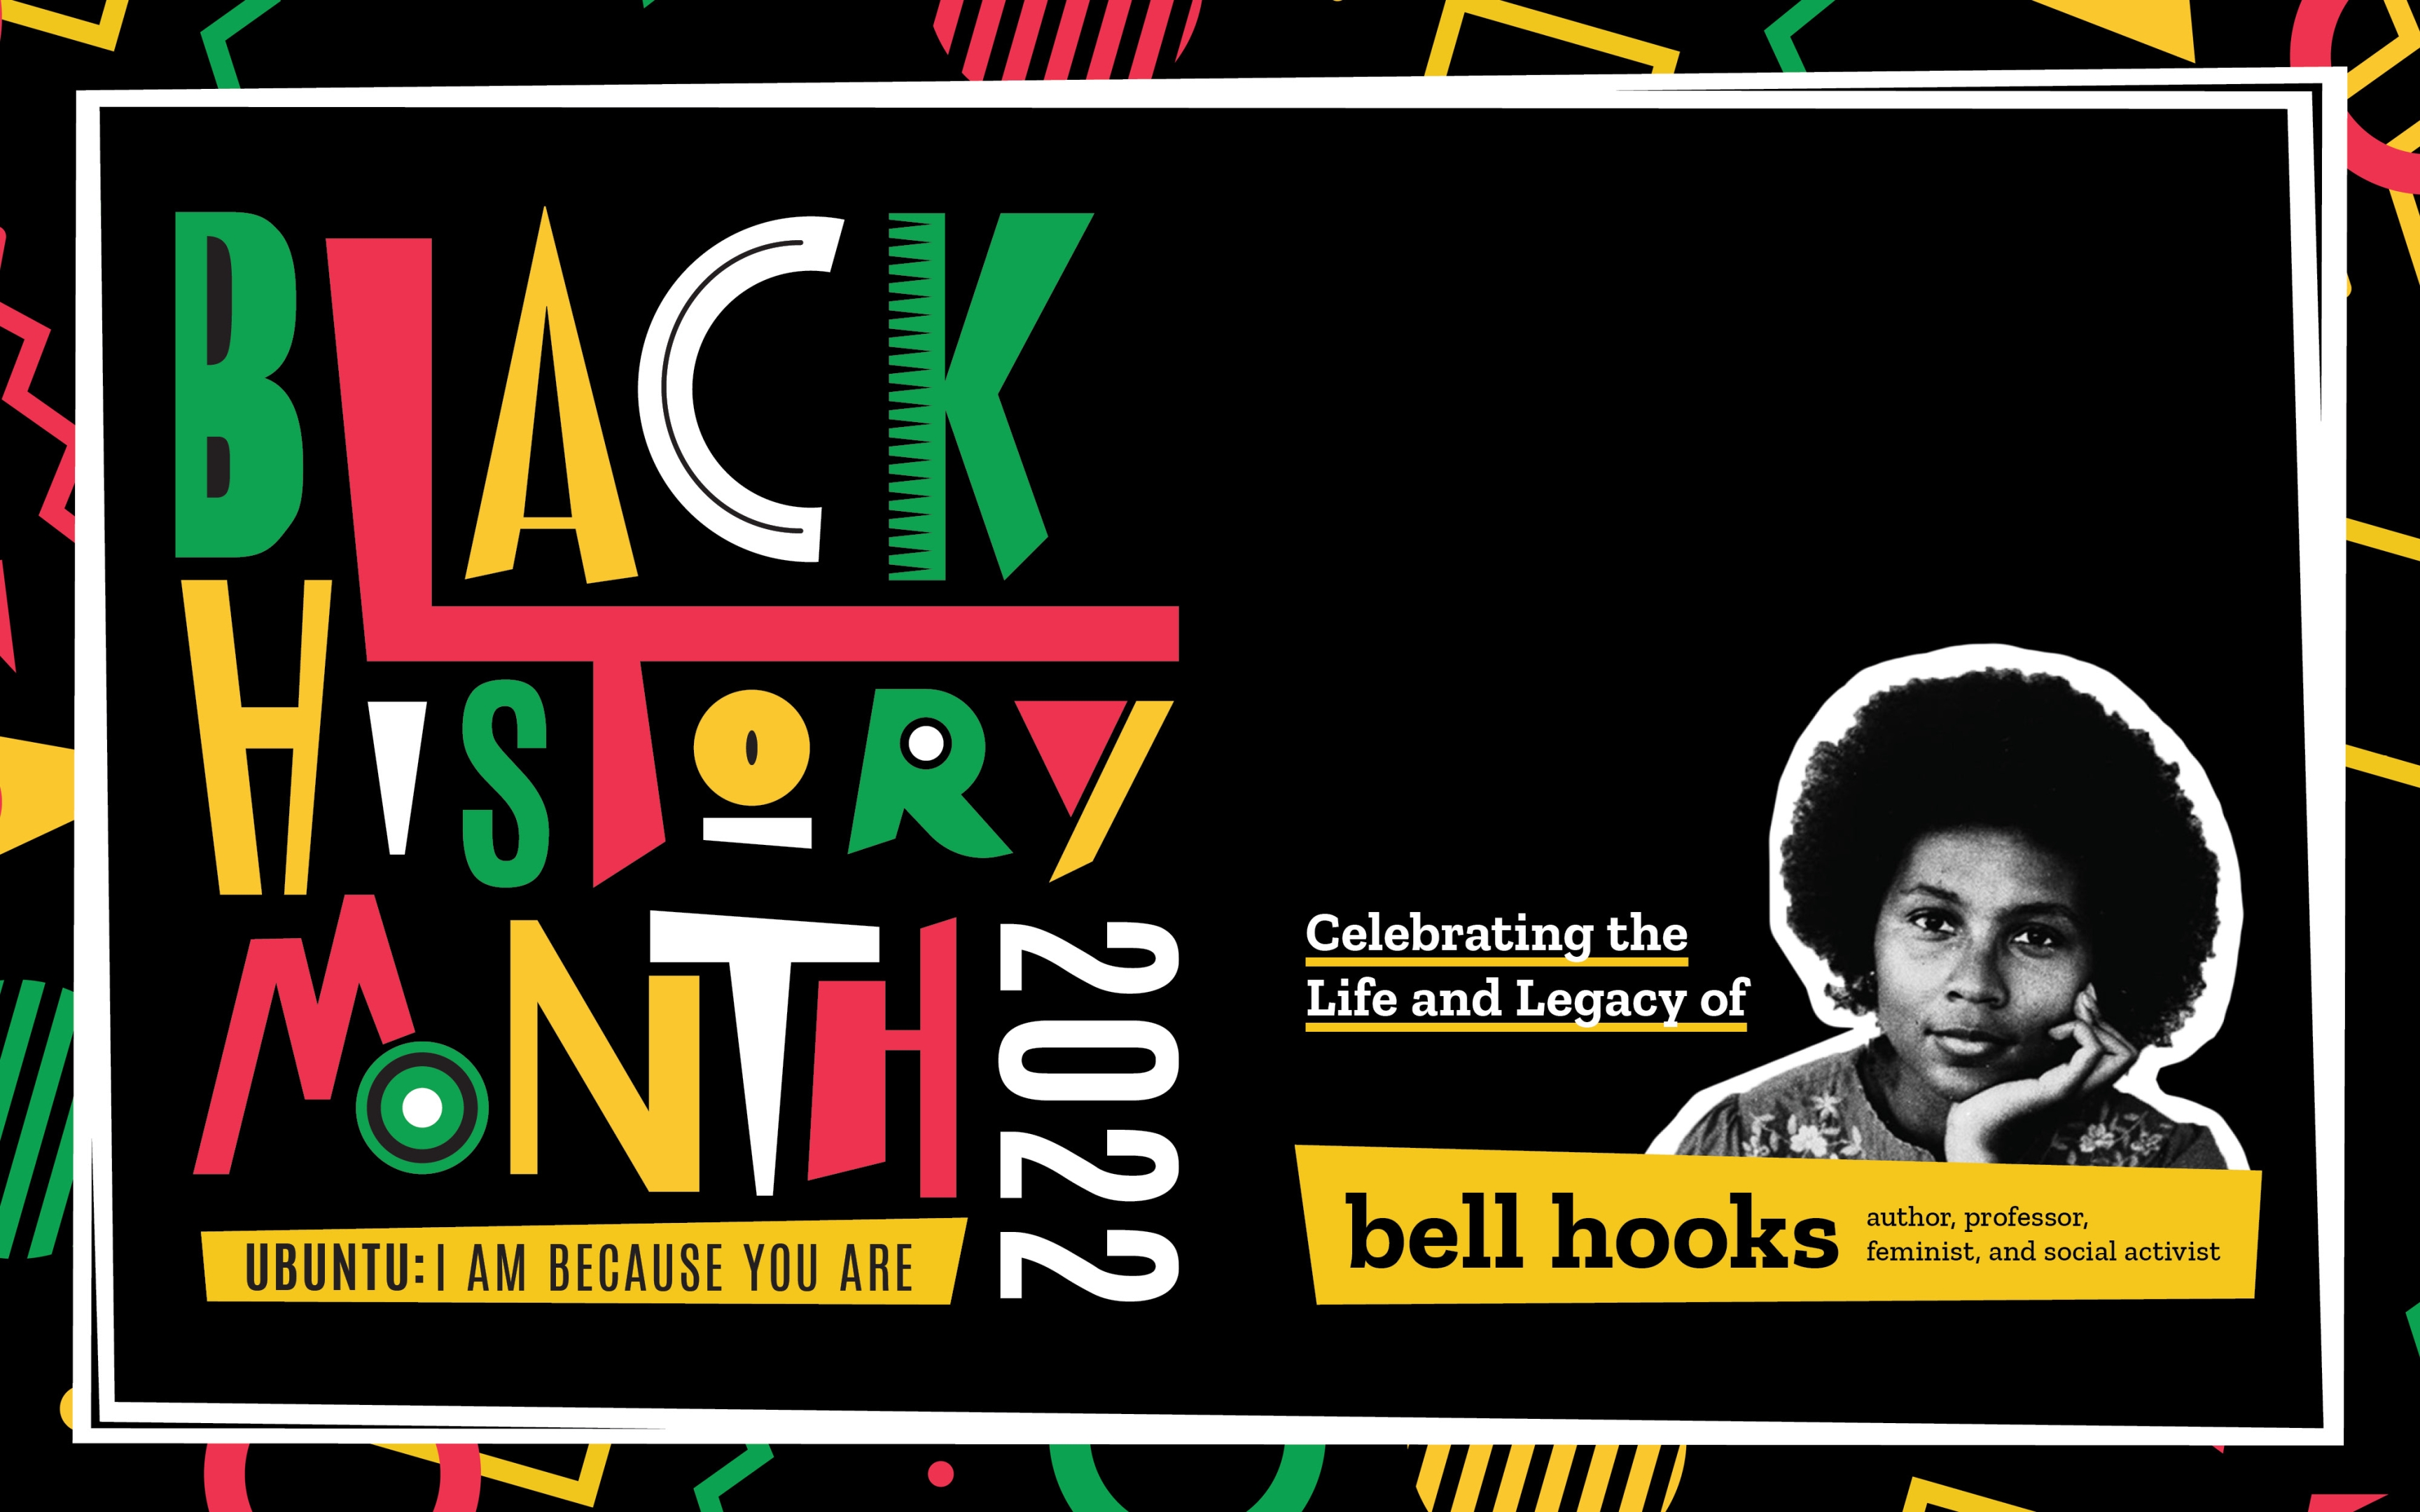 Black History Month Celebrating the Life of bell hooks